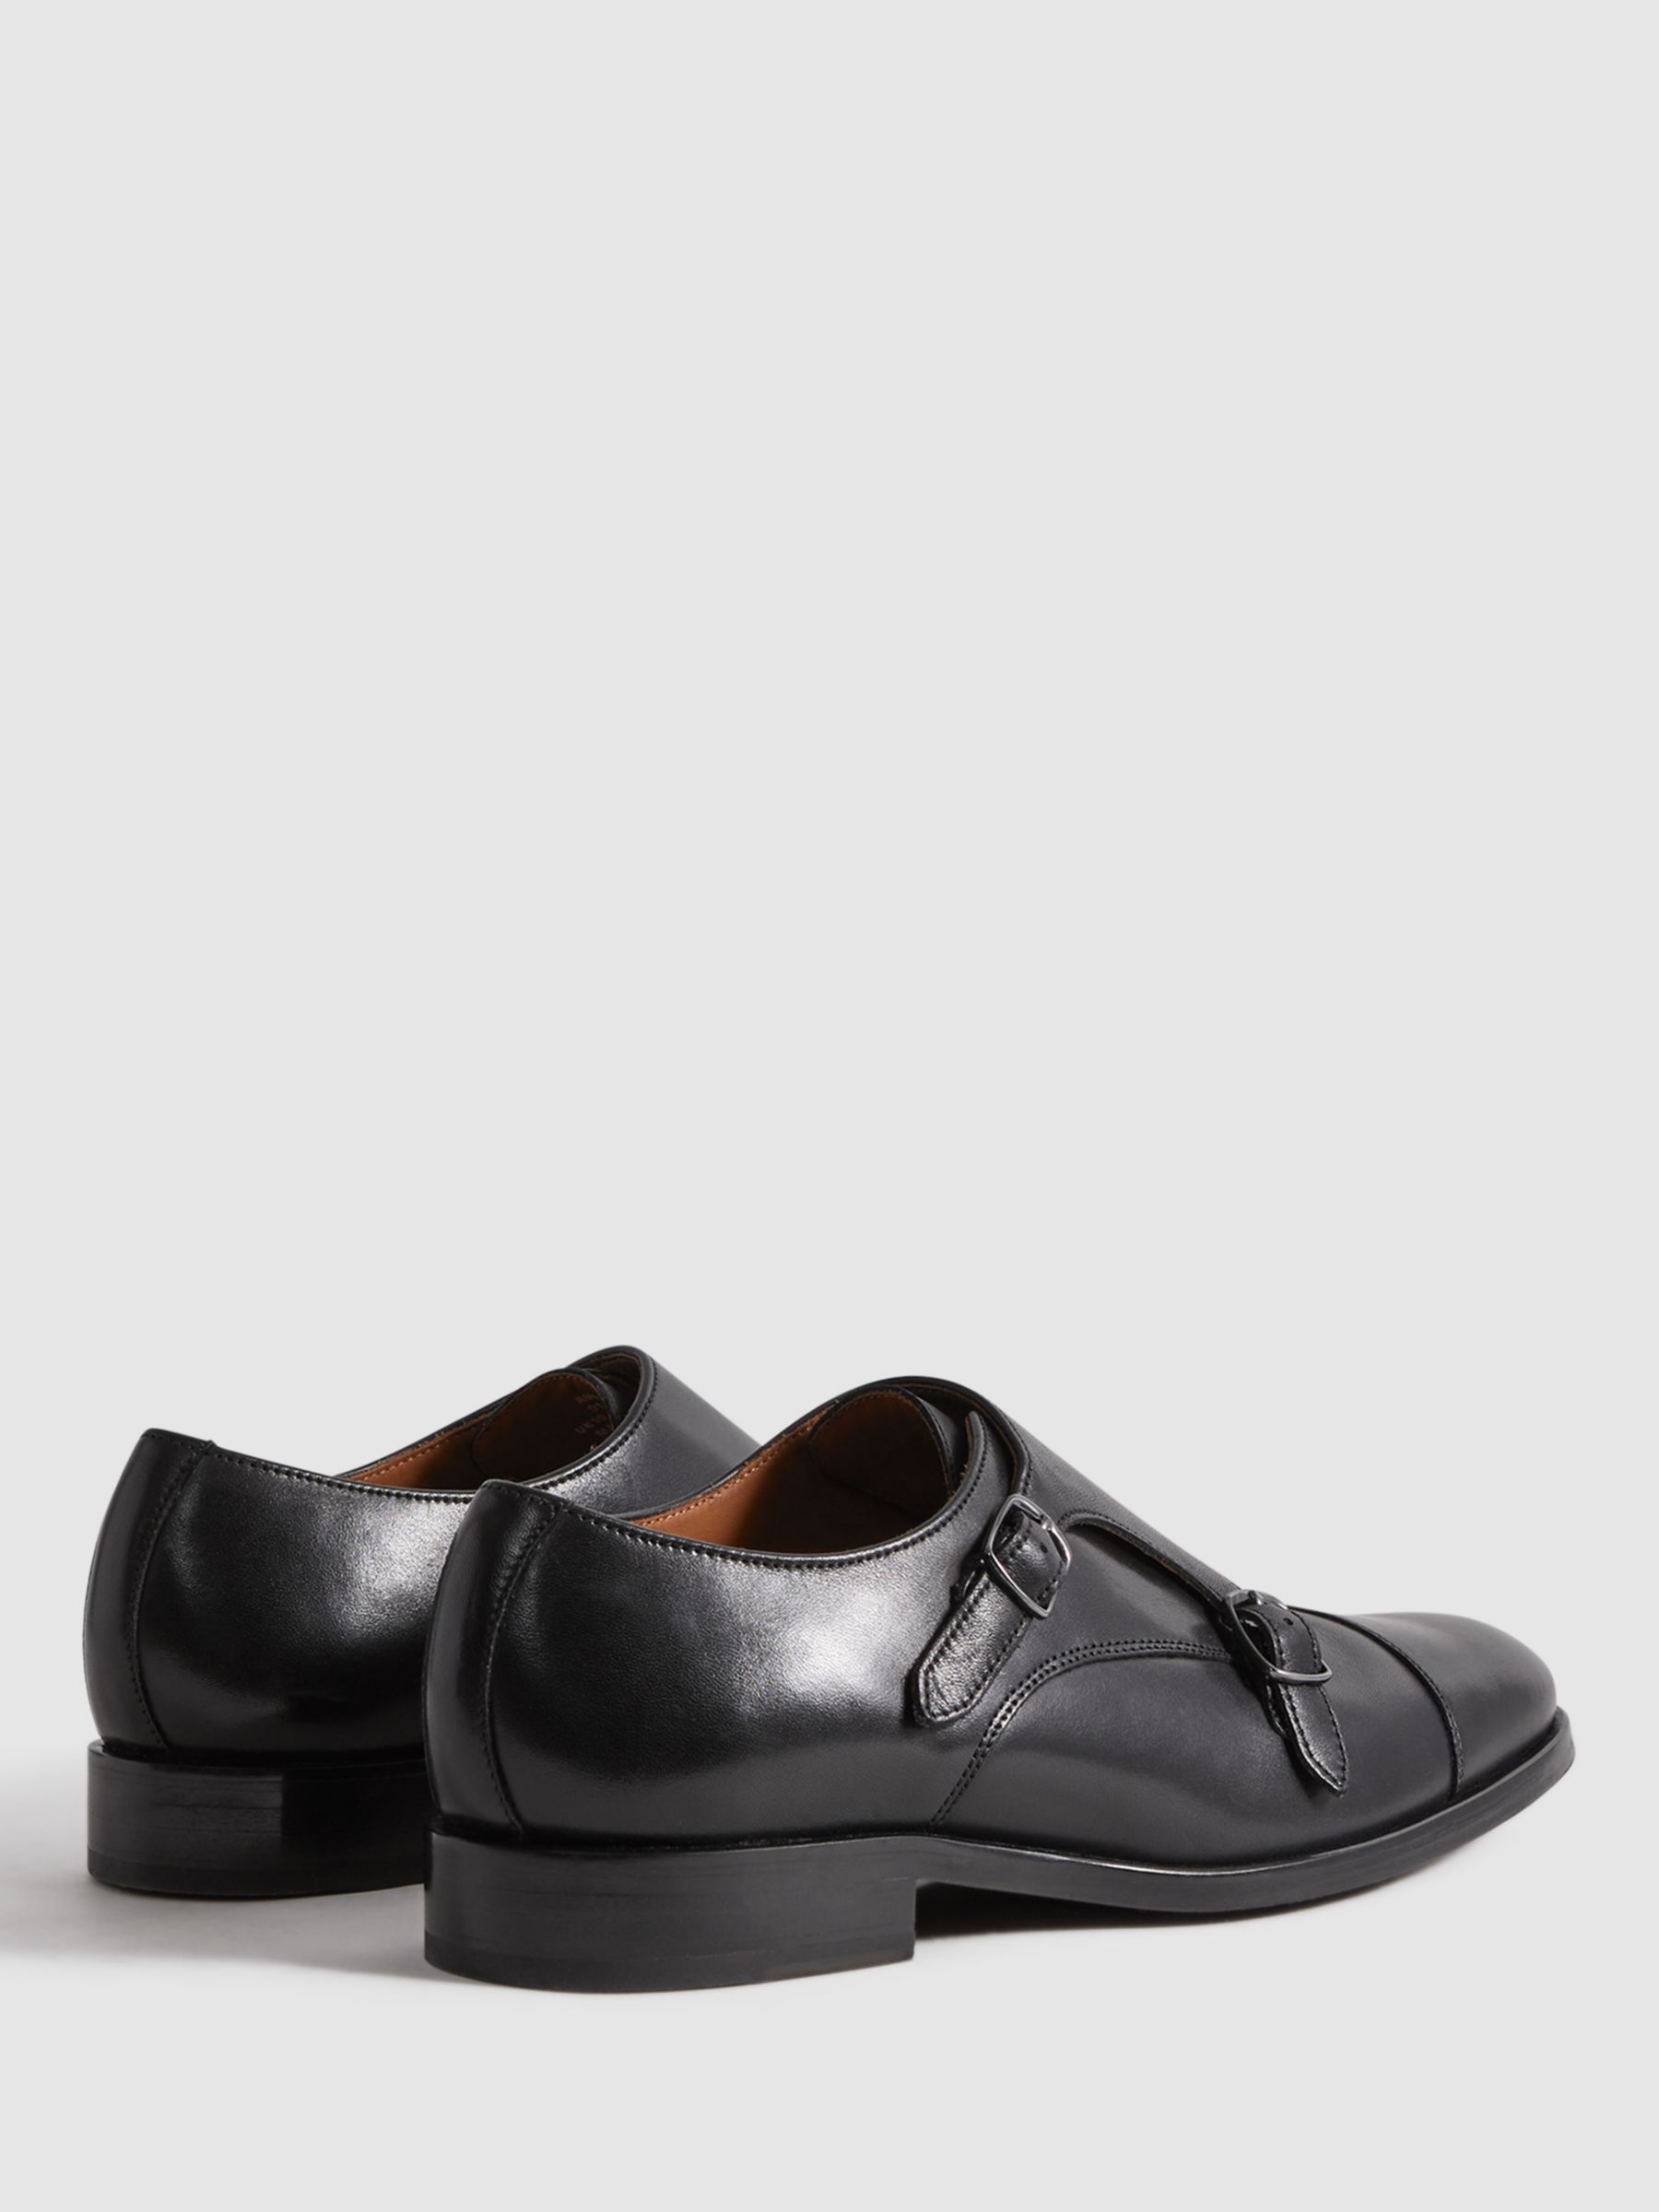 Reiss Amalfi Monk Shoes, Black, 11